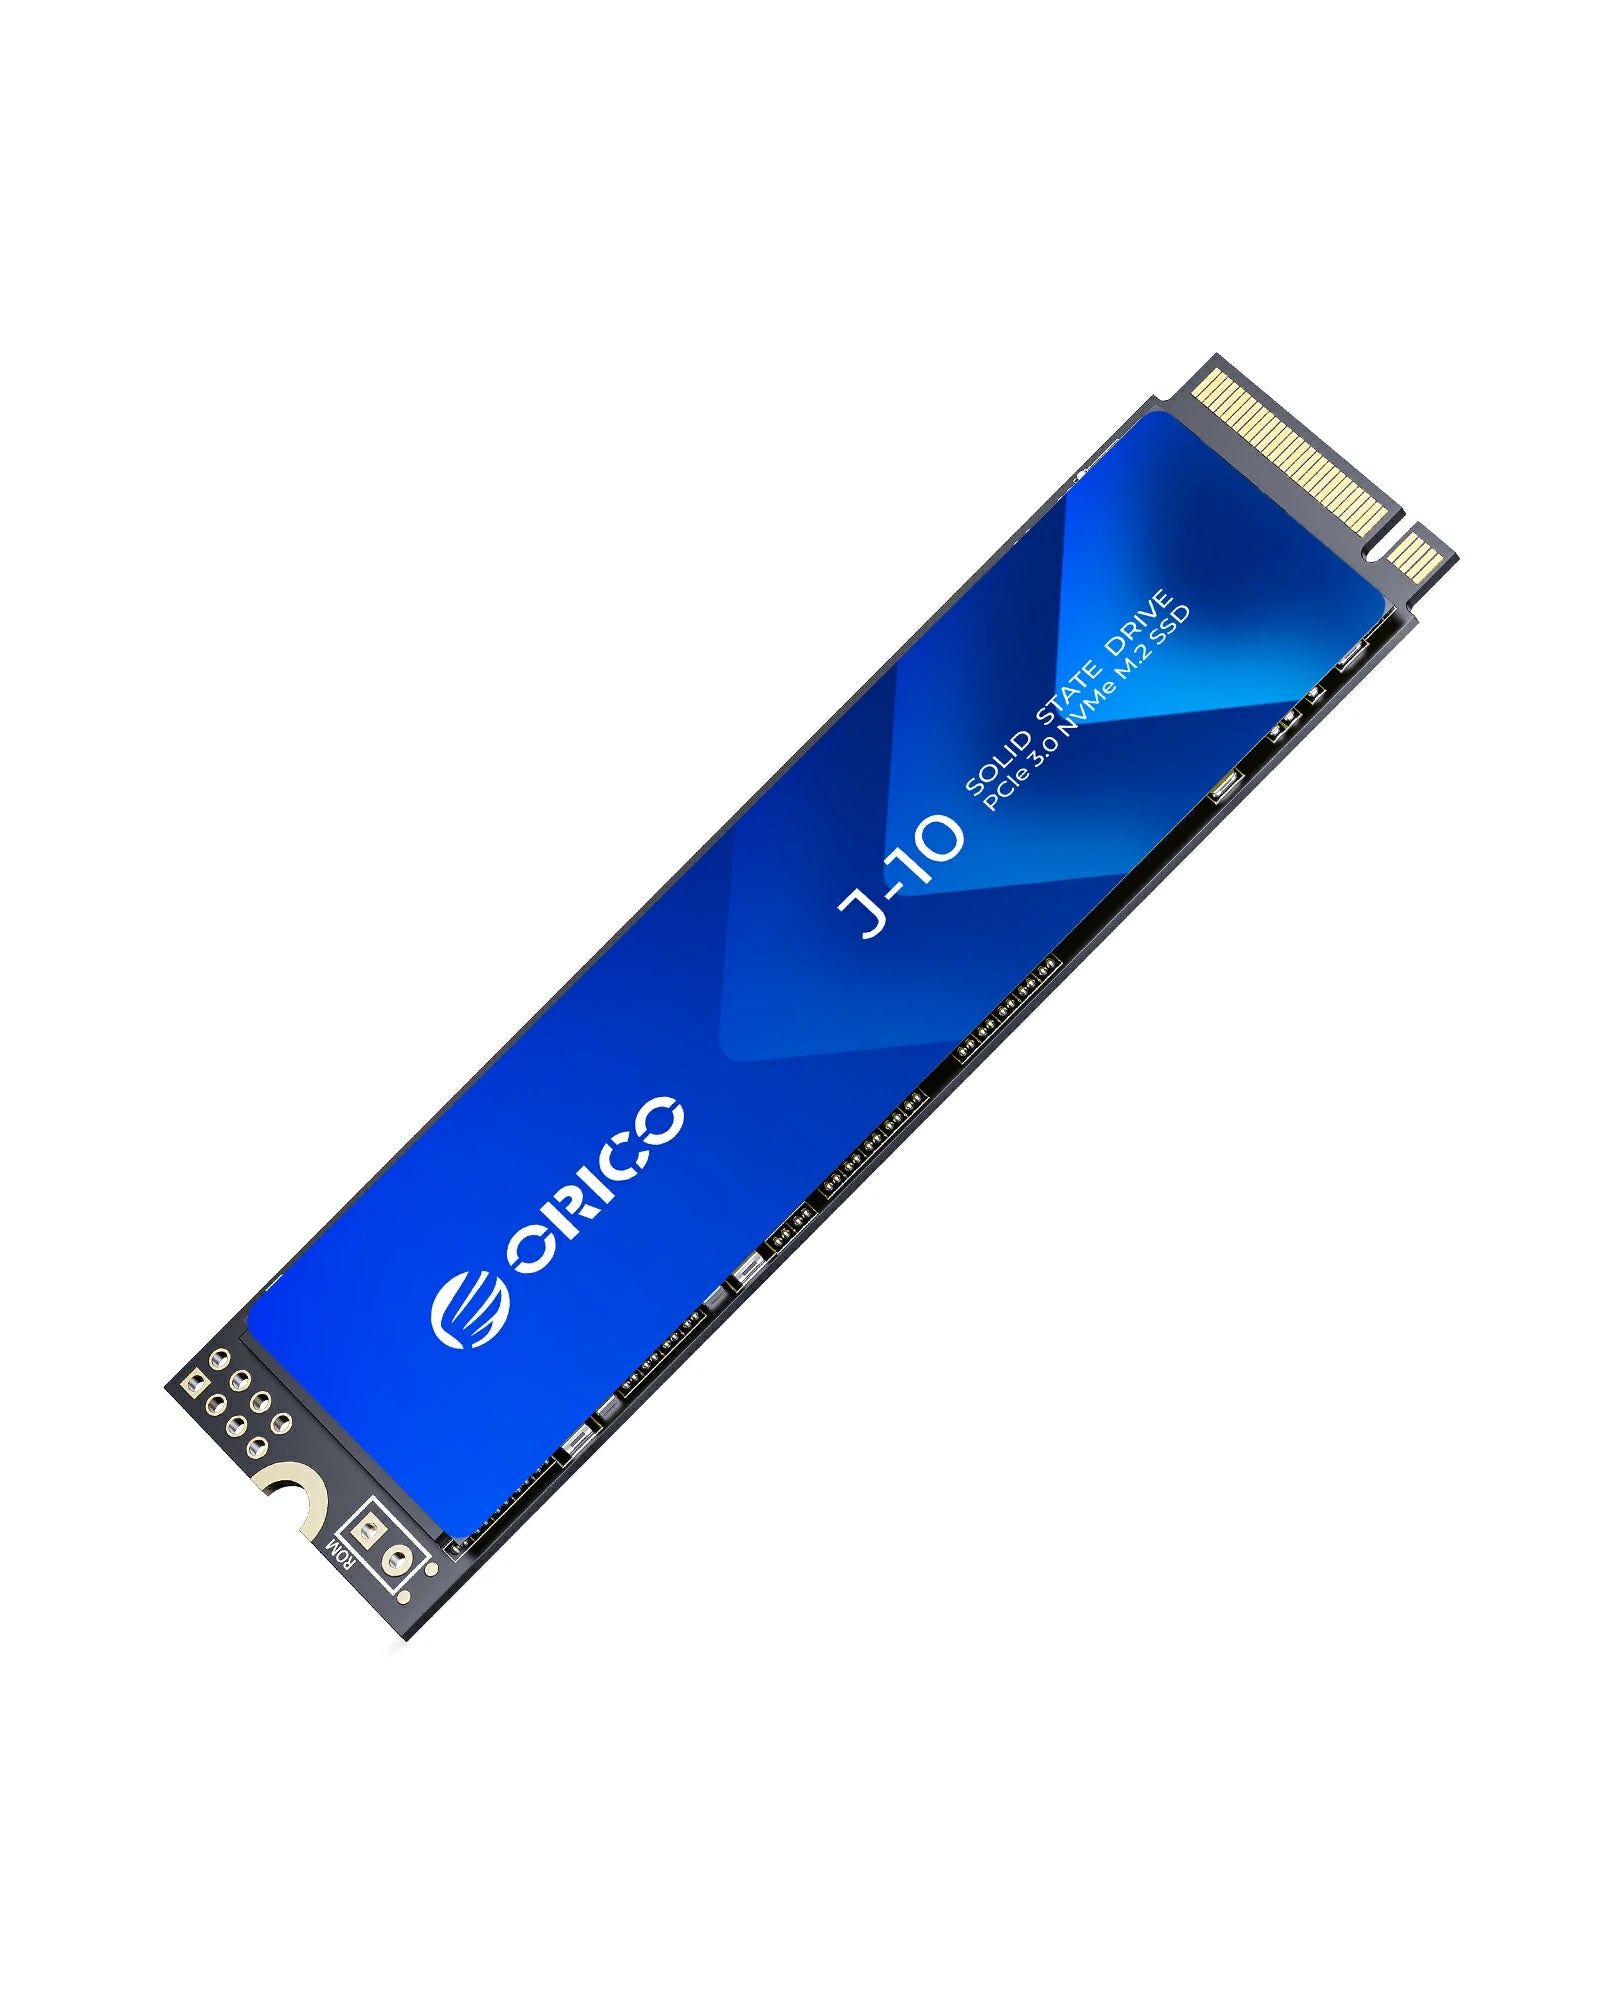 M.2 NVMe SSD 512GB - Troodon Series - Orico